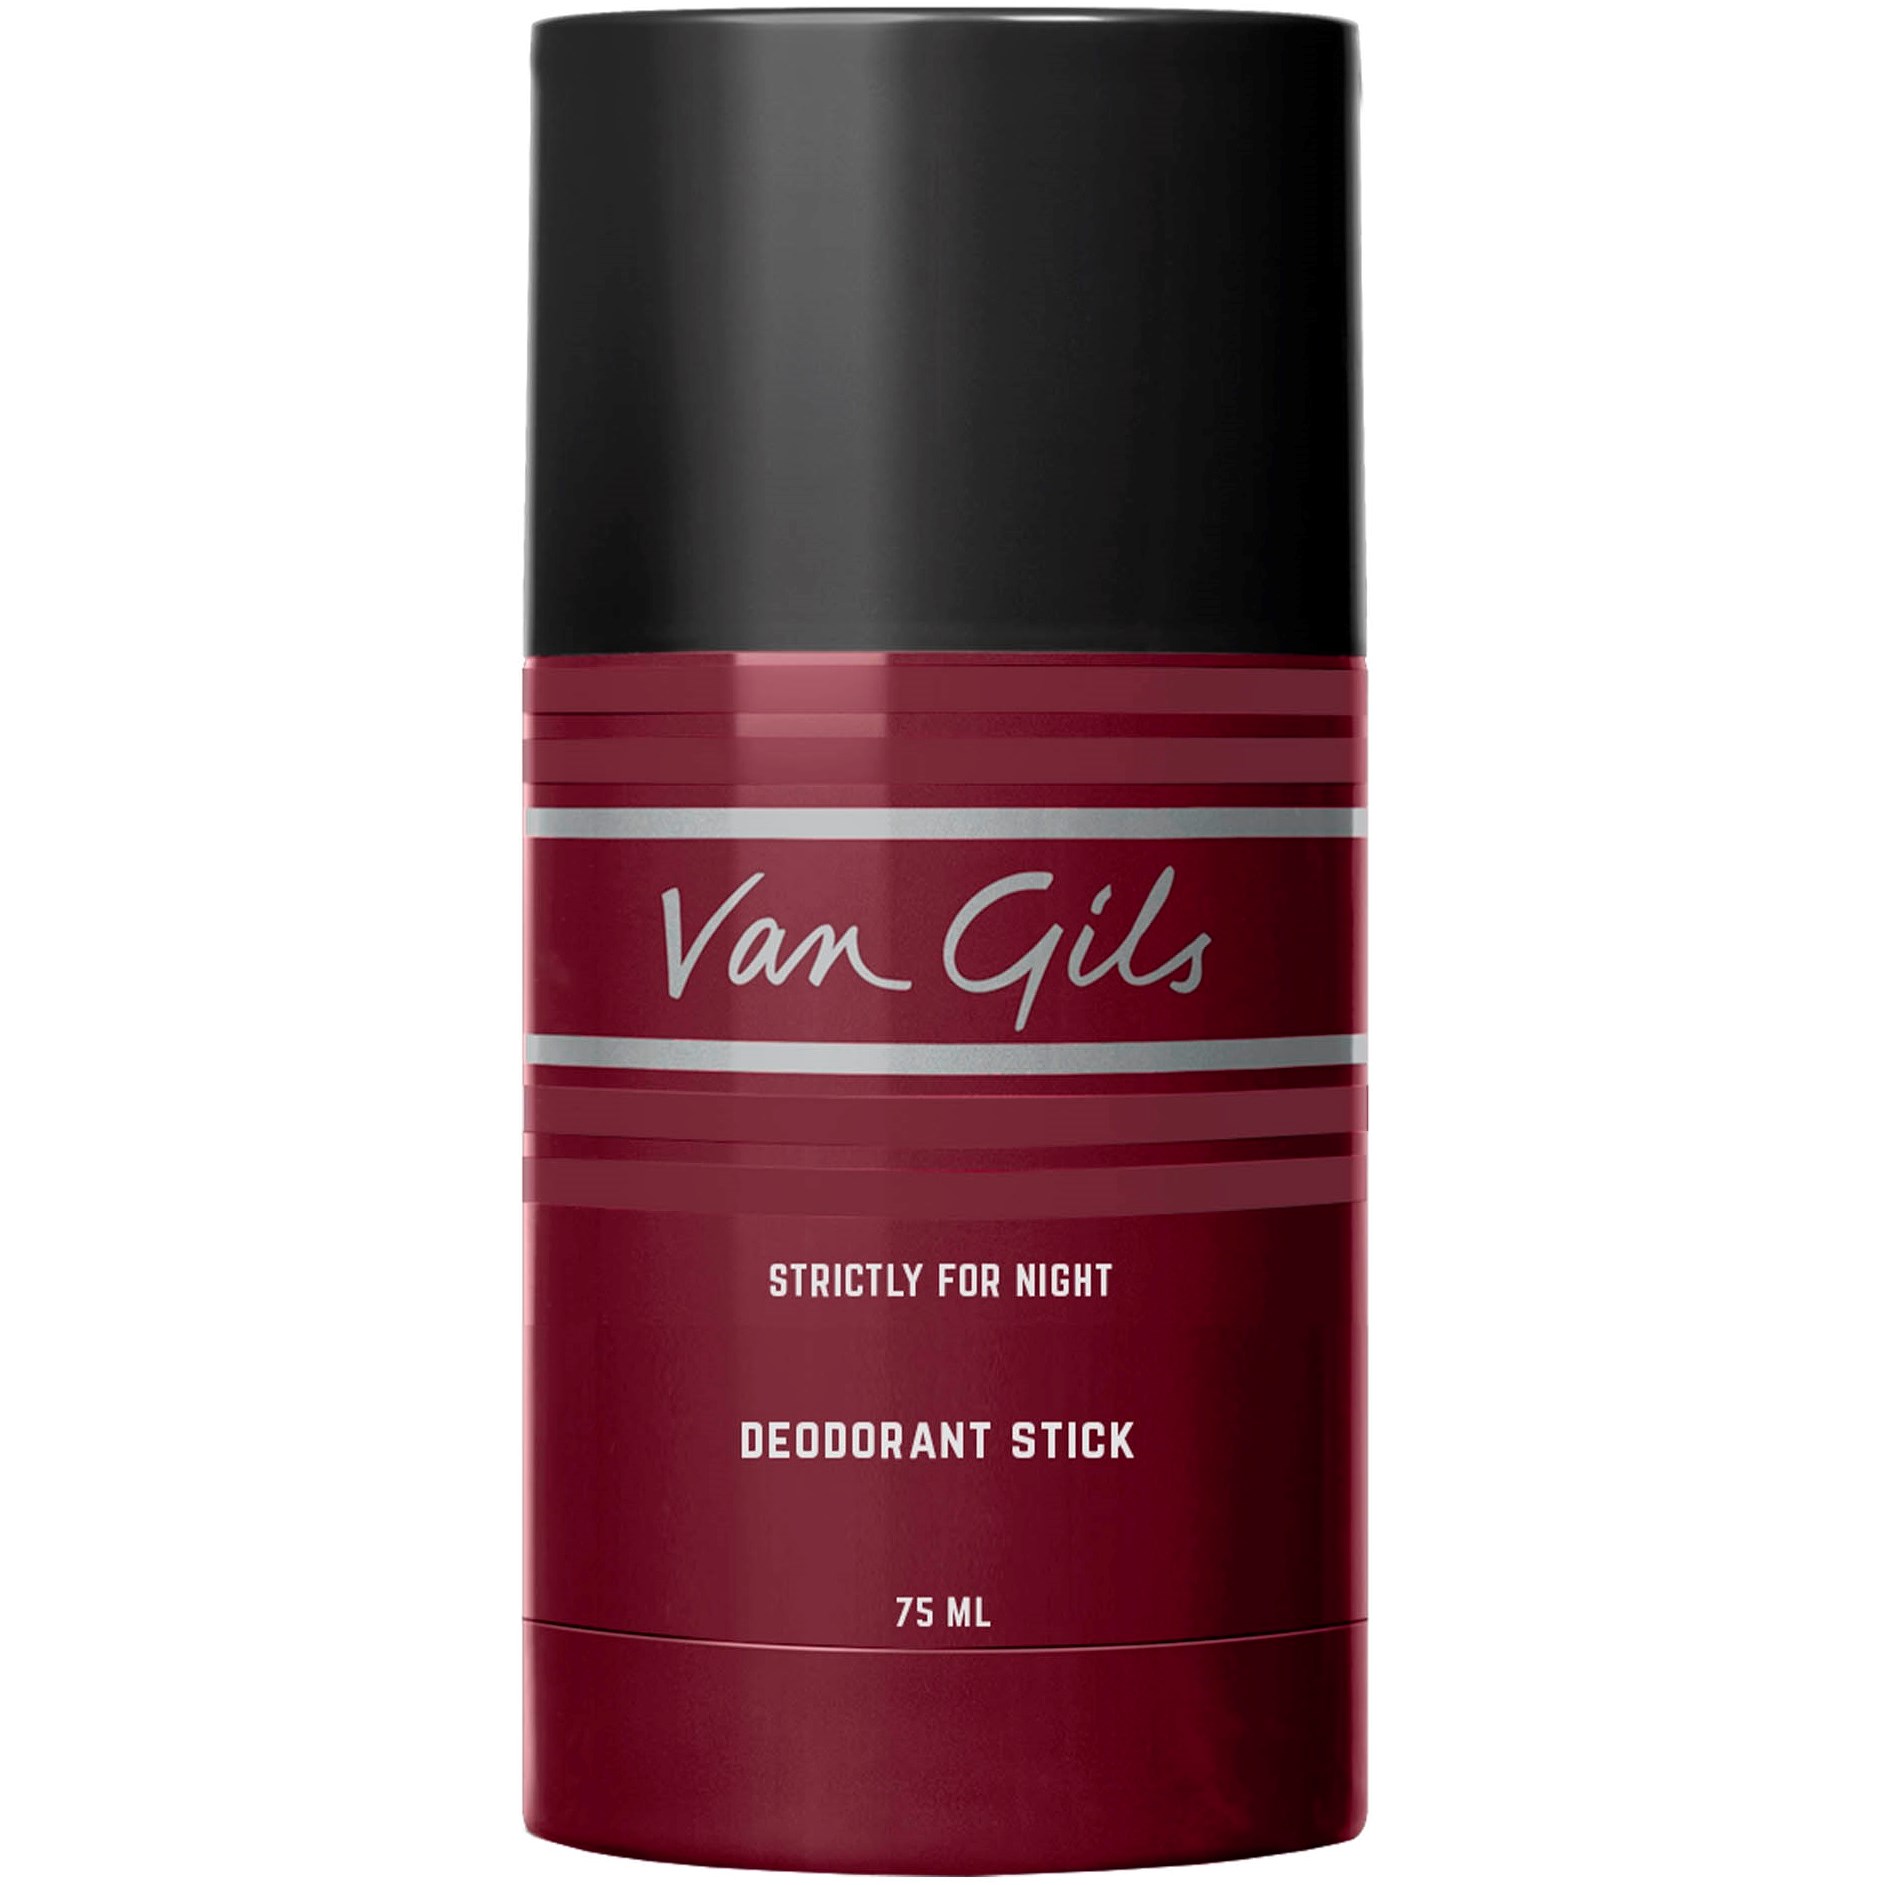 Van Gils Strictly For Night Deodorant Stick 75 ml